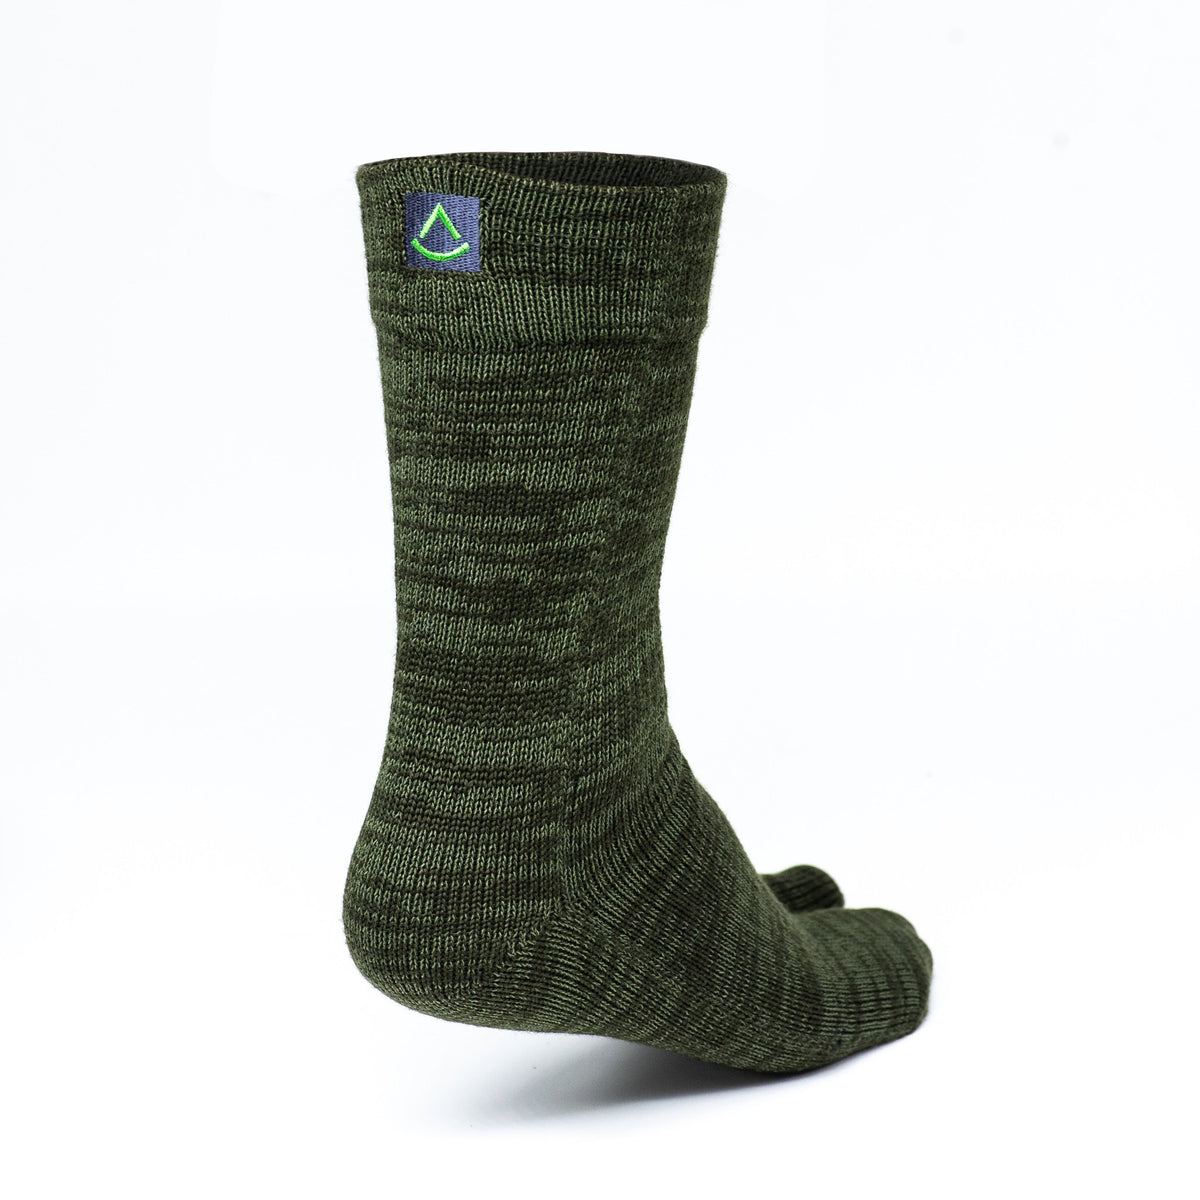 Fluffy YUBI Tabi Socks - Merino Wool &amp; Washi Paper Blend - Crew Cut - LUNA Sandals